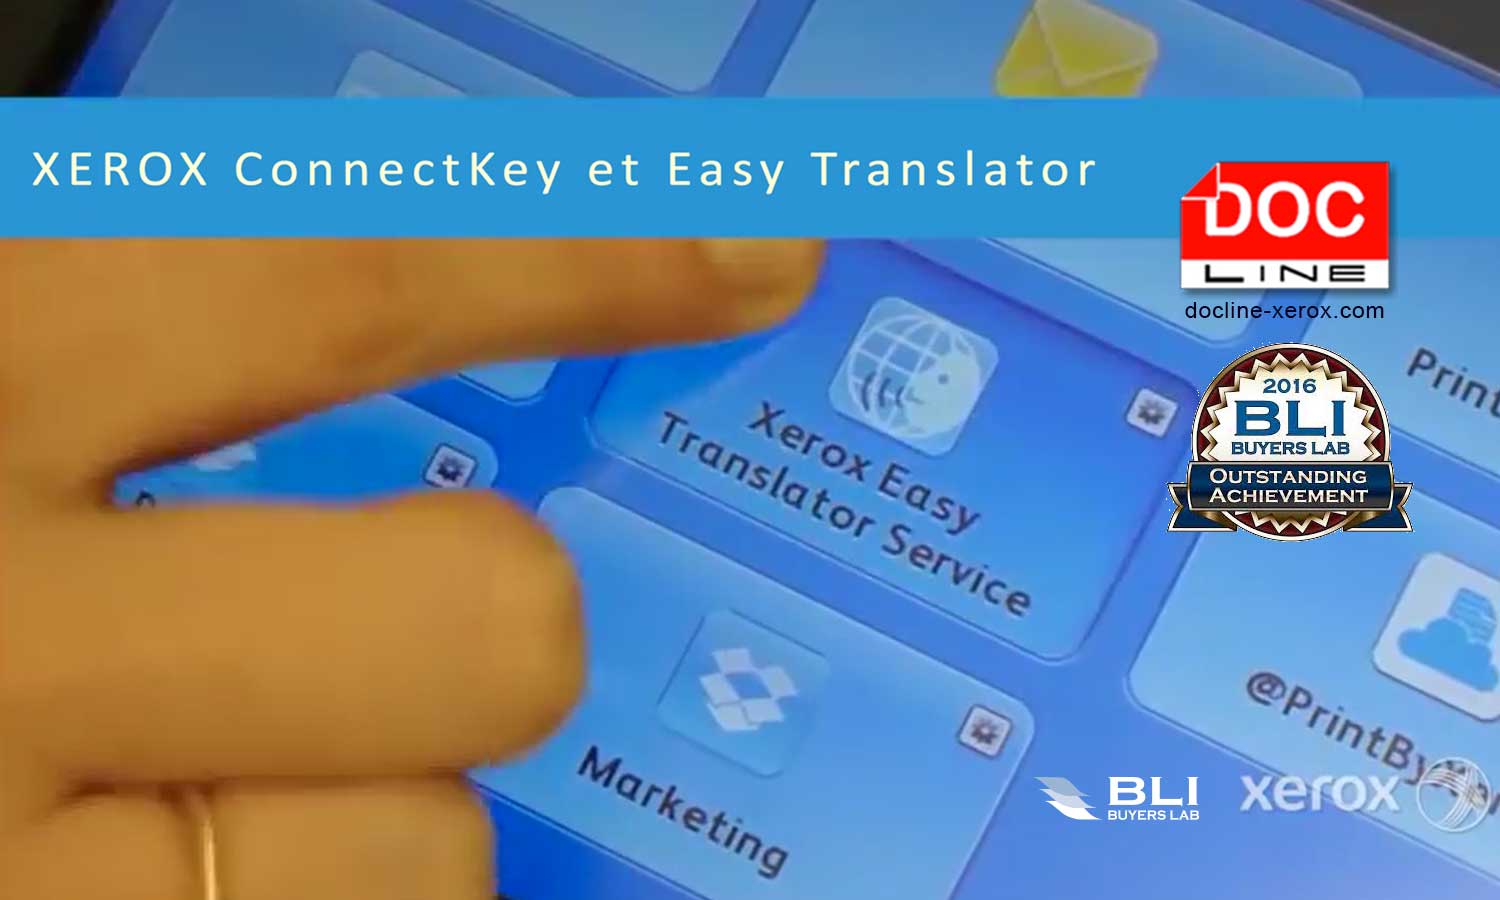 docline-xerox-easy-translator-connectkey